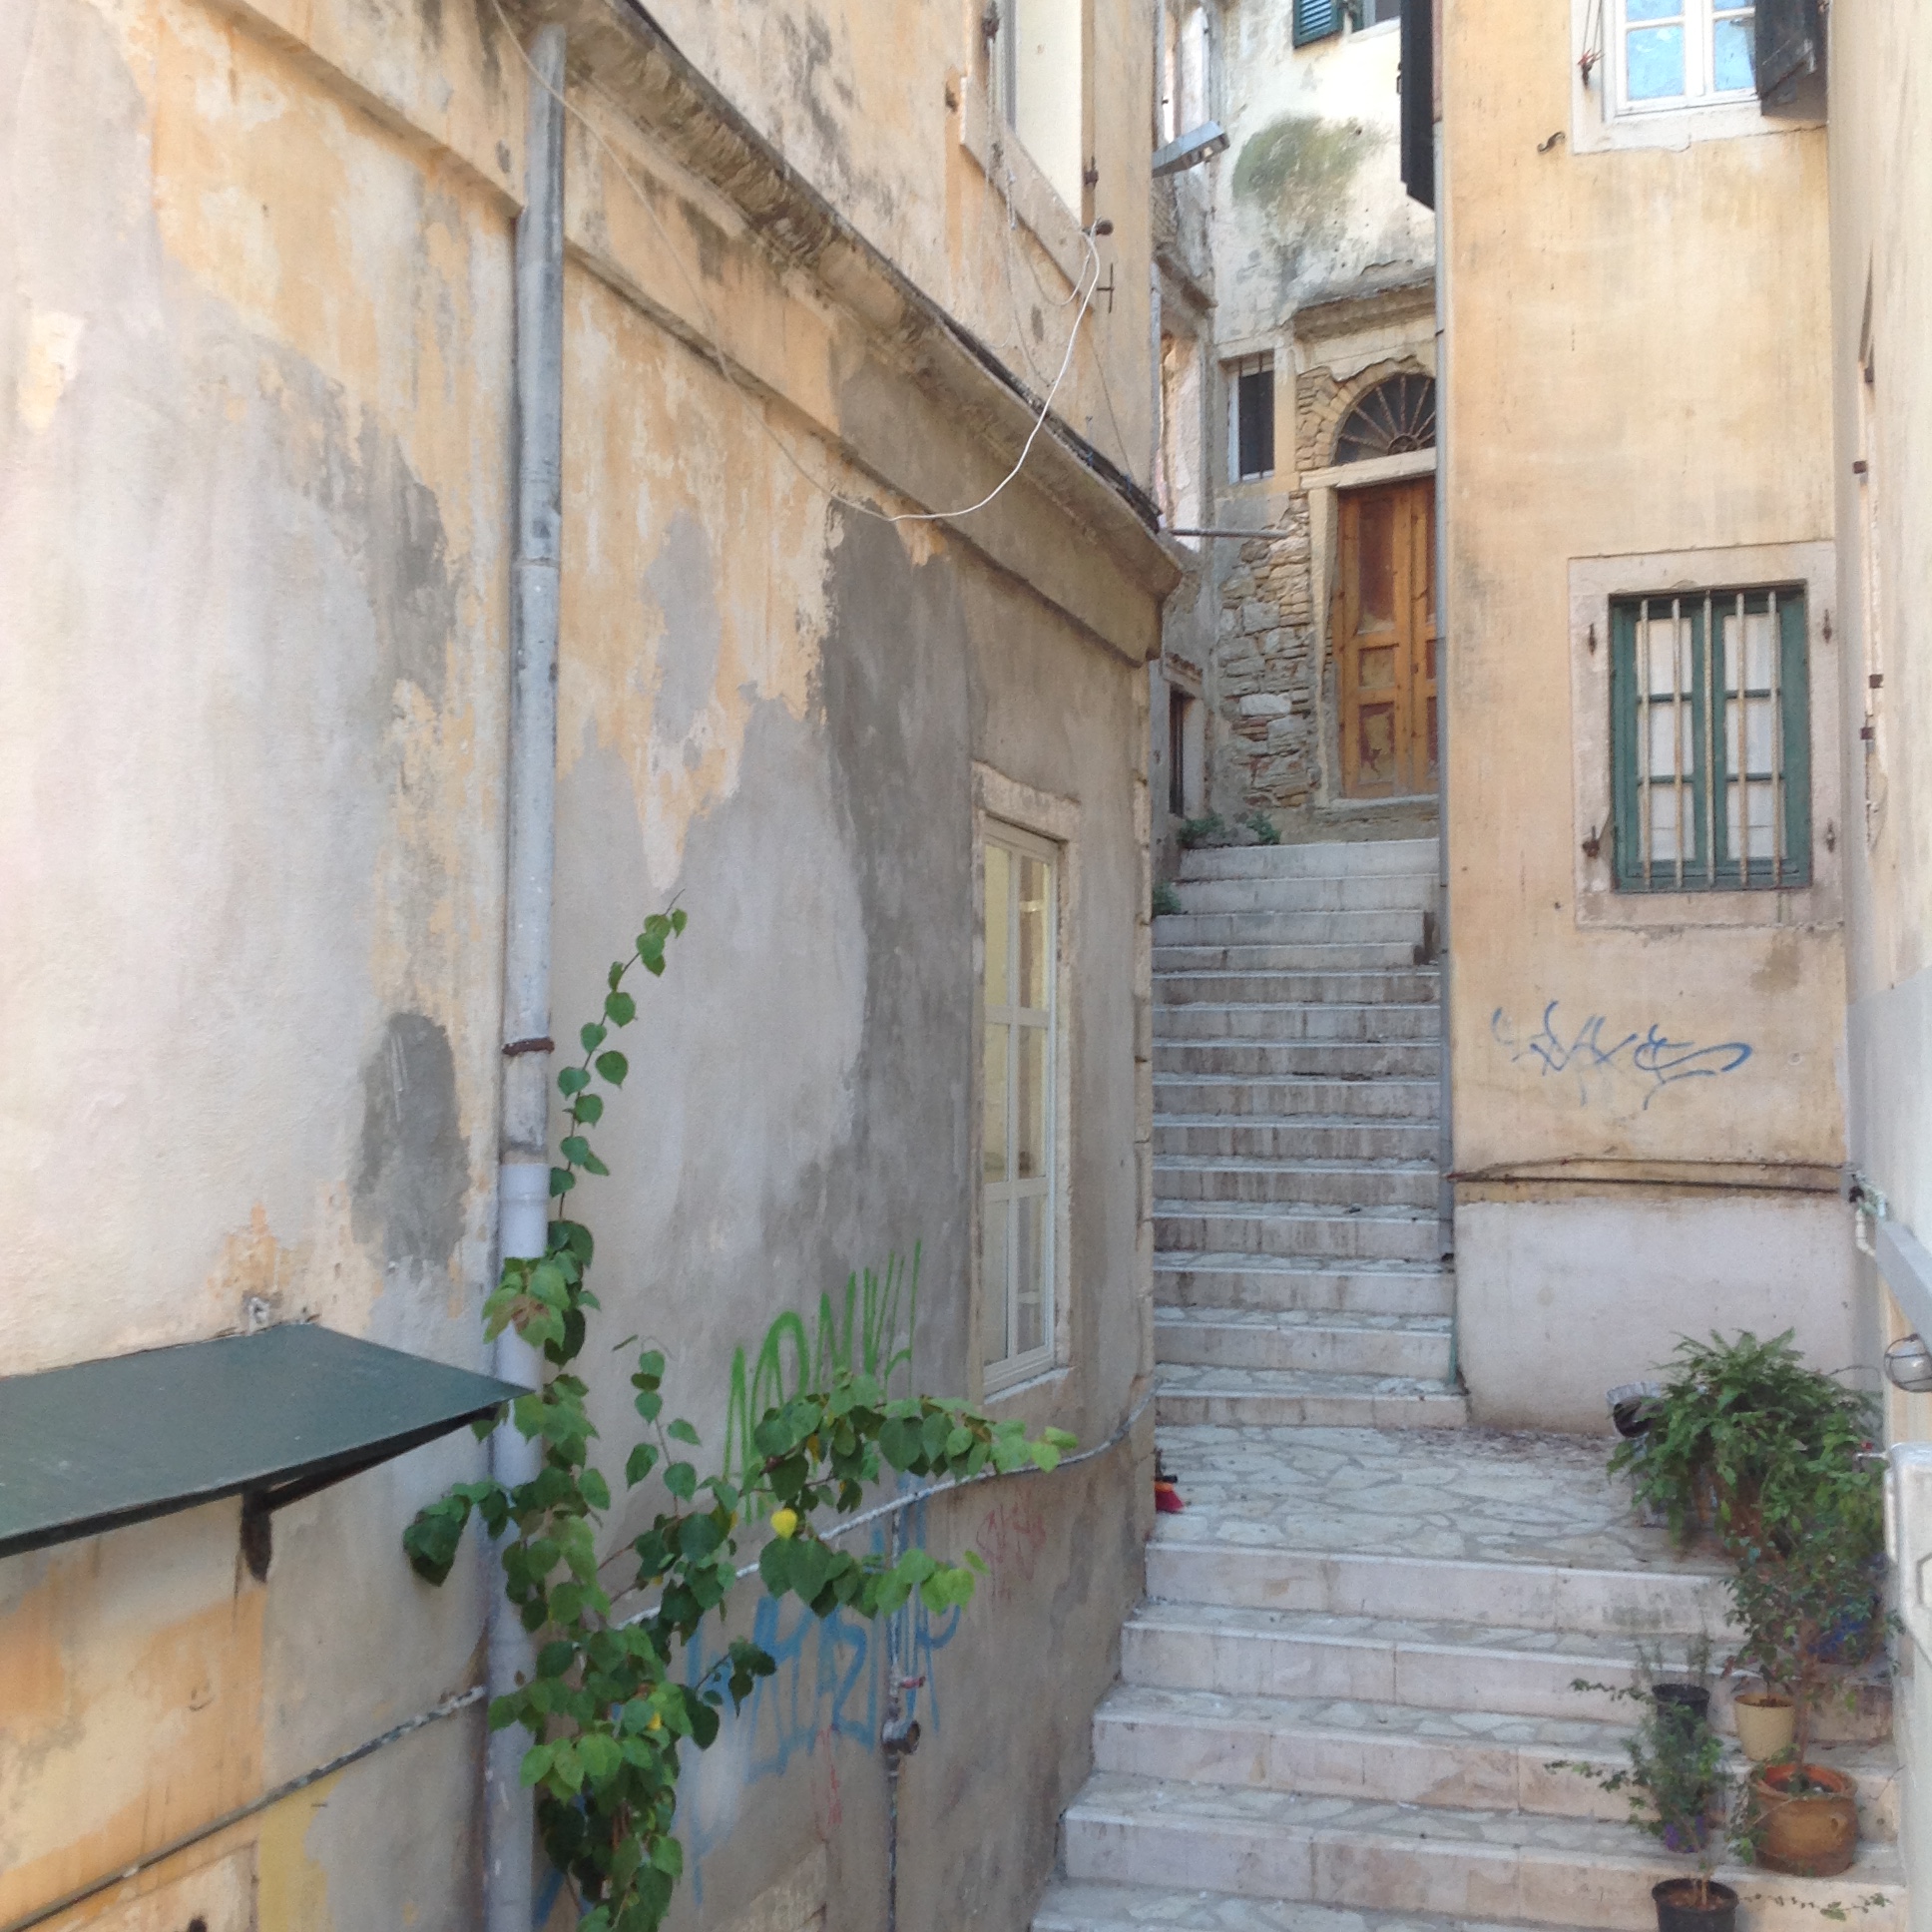 Streets of Corfu